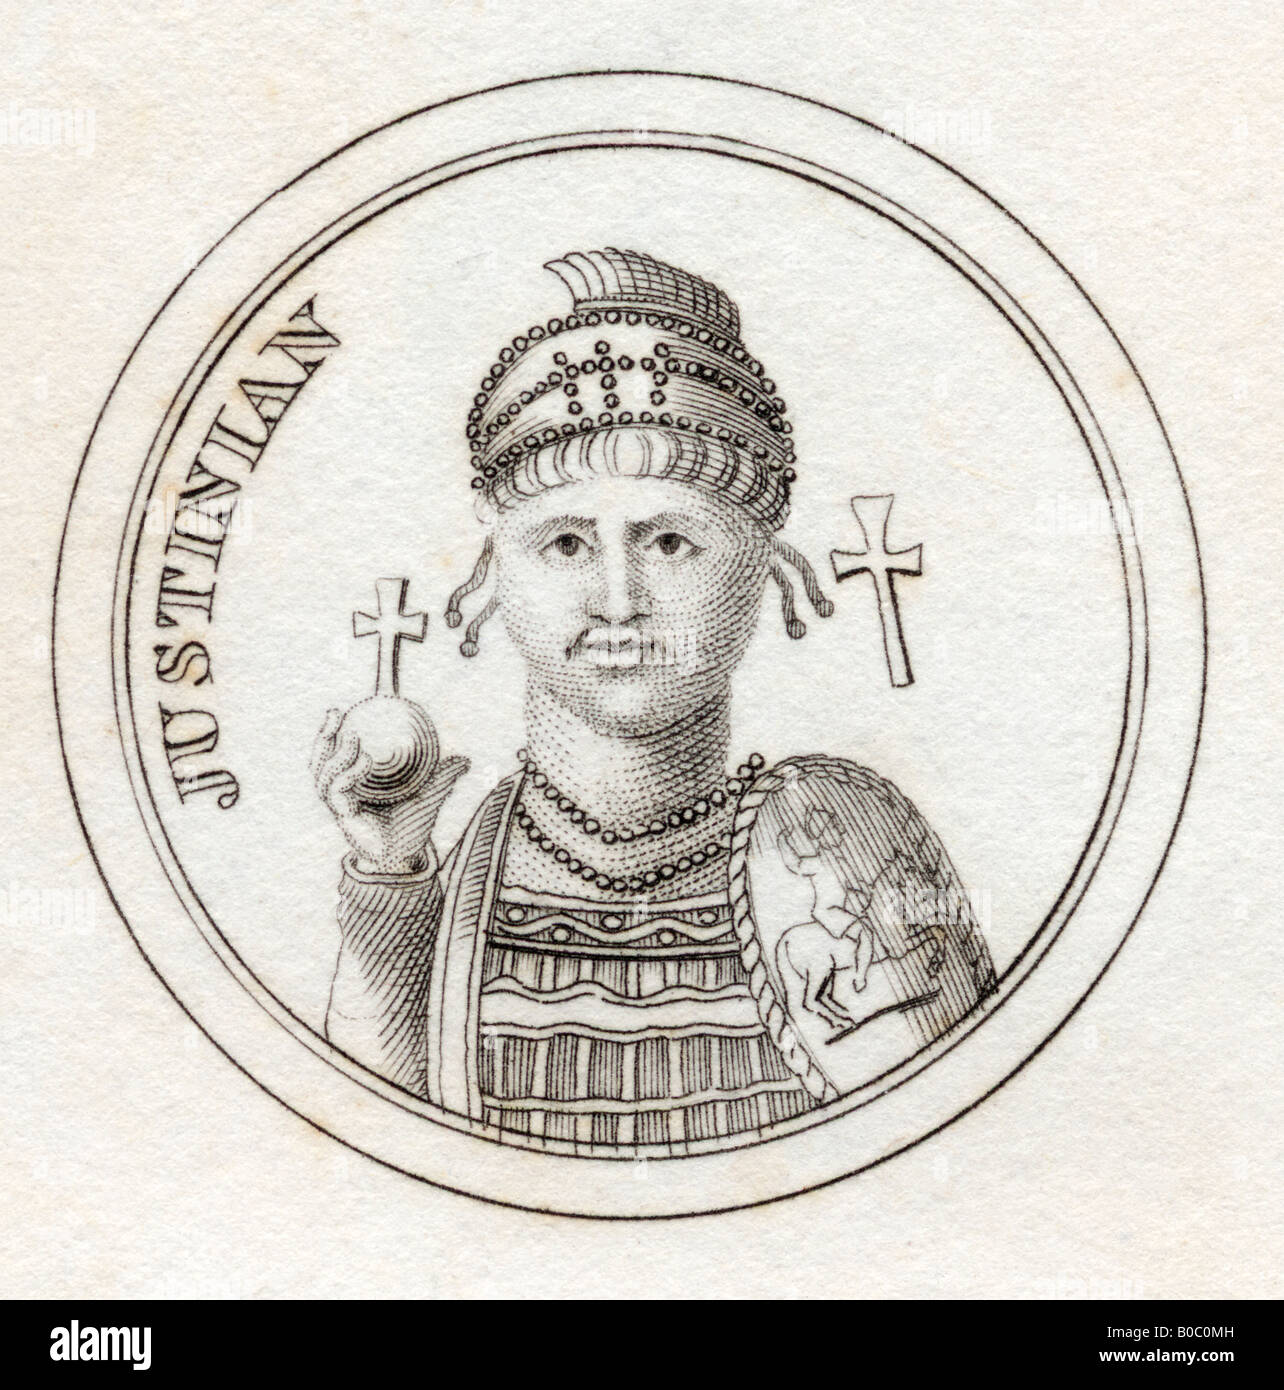 Justinian I or Justinian the Great, Flavius Petrus Sabbatius Justinianus, 482 - 565. Eastern Roman Emperor. Stock Photo